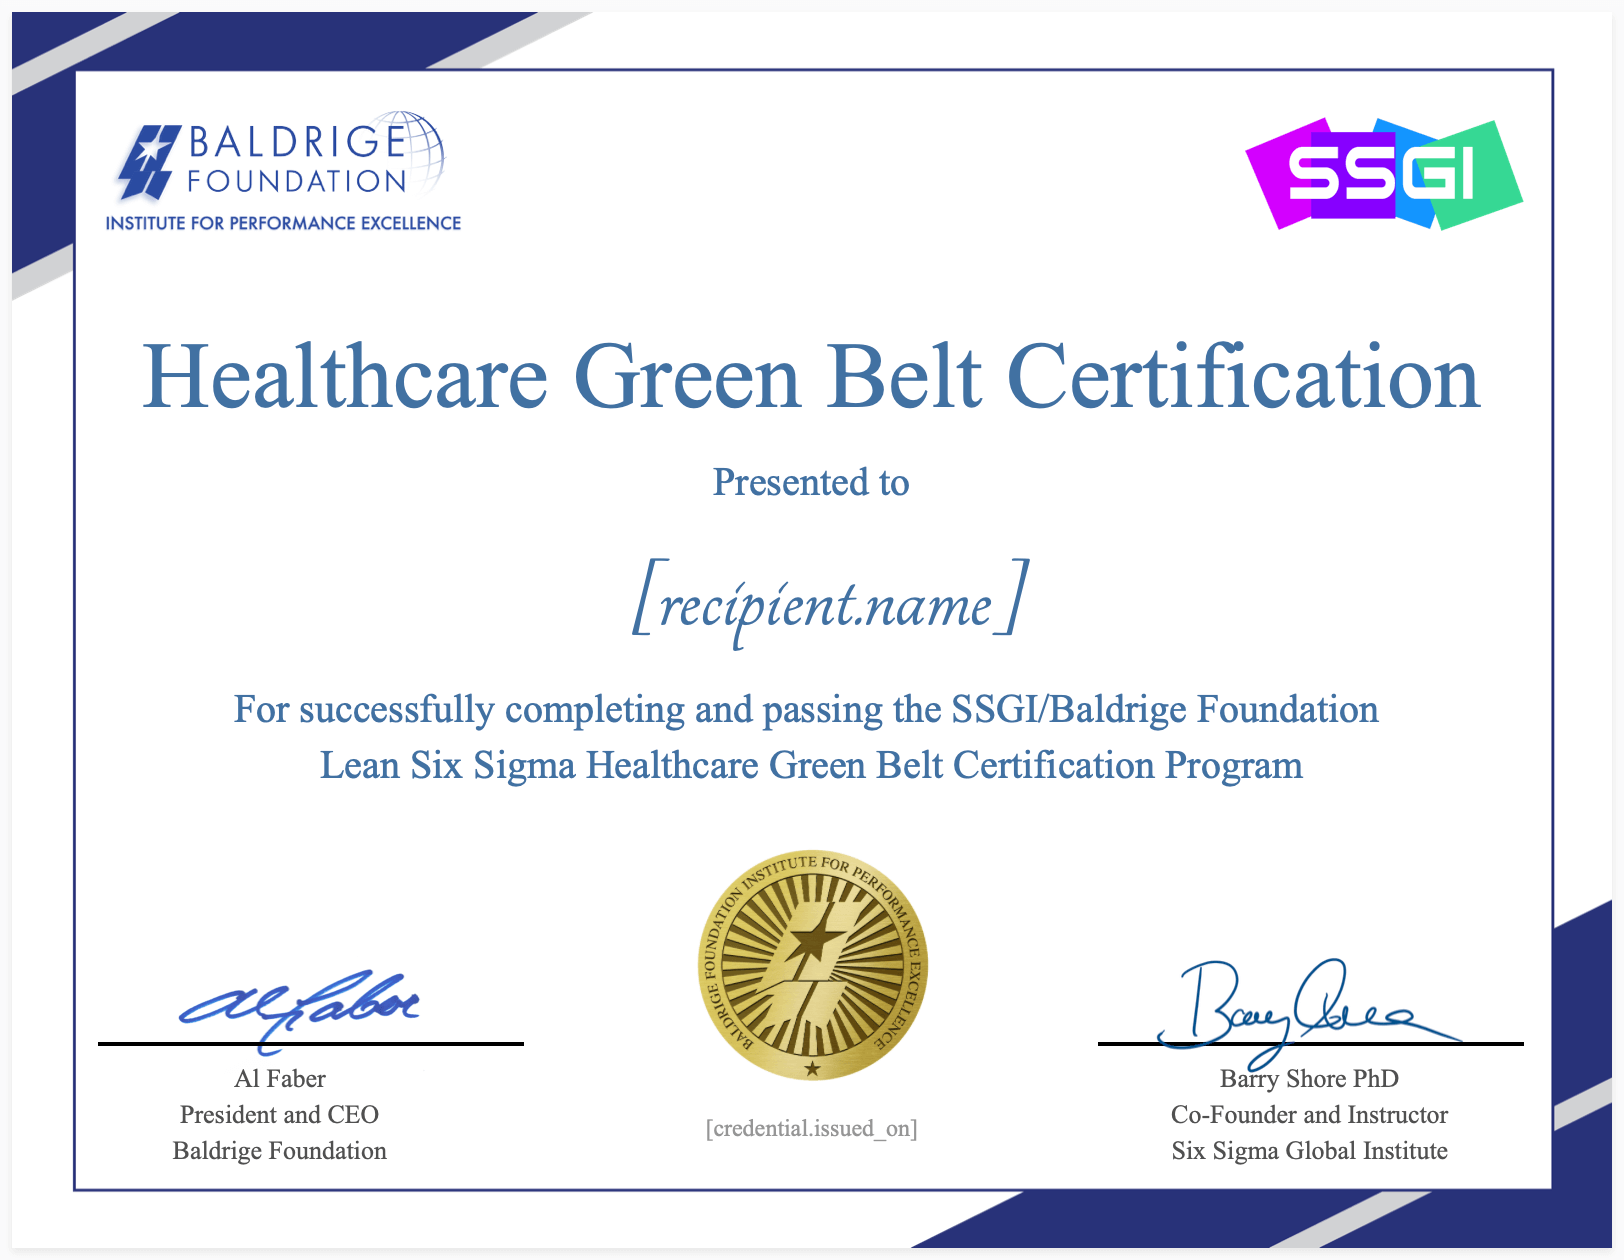 baldrige healthcare green belt certification